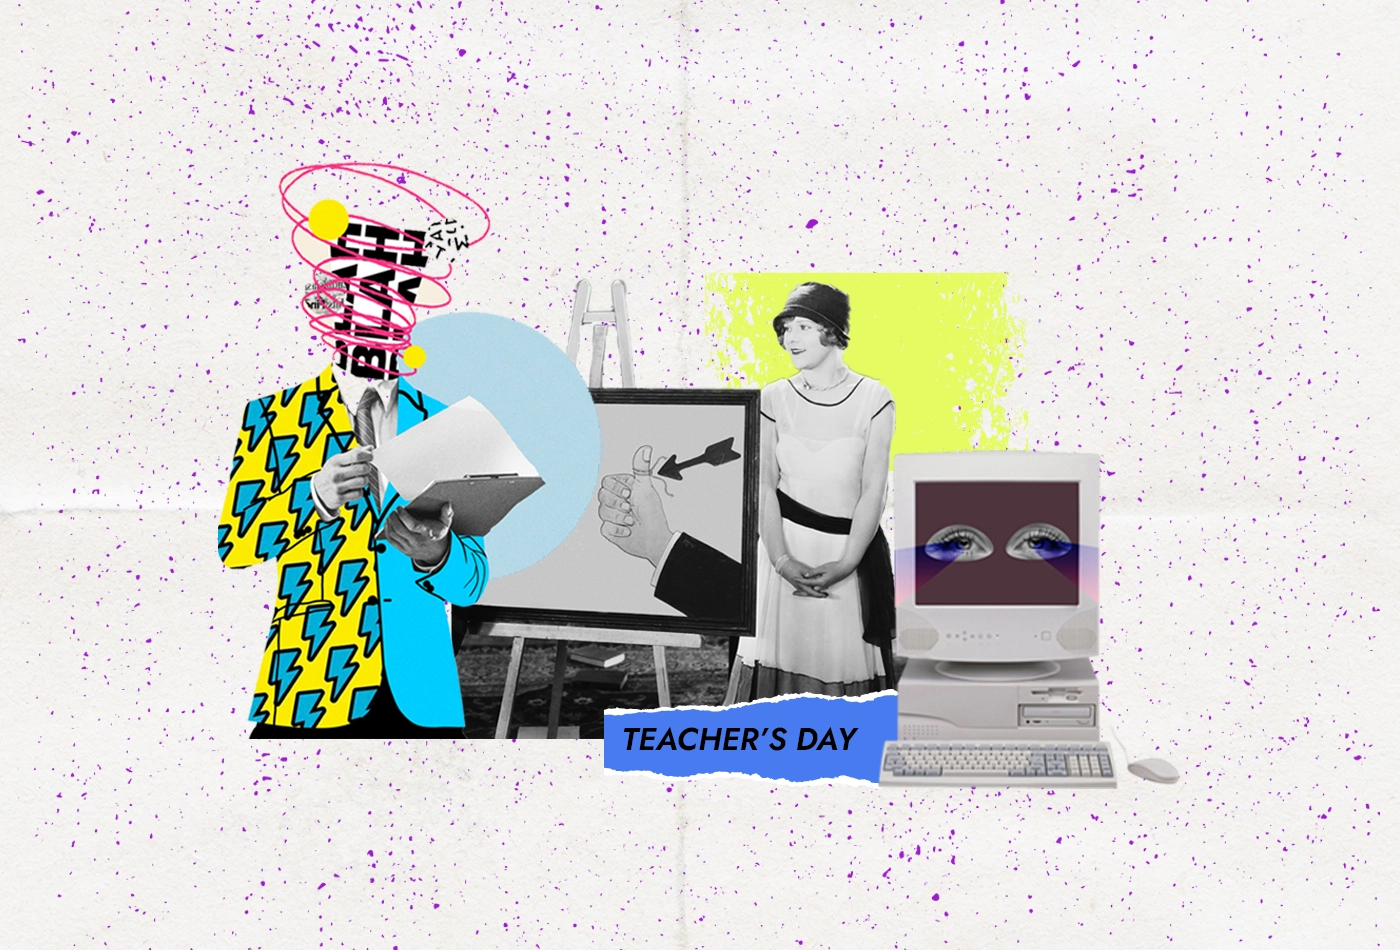 Best Teacher’s Day Advertisements by Brands